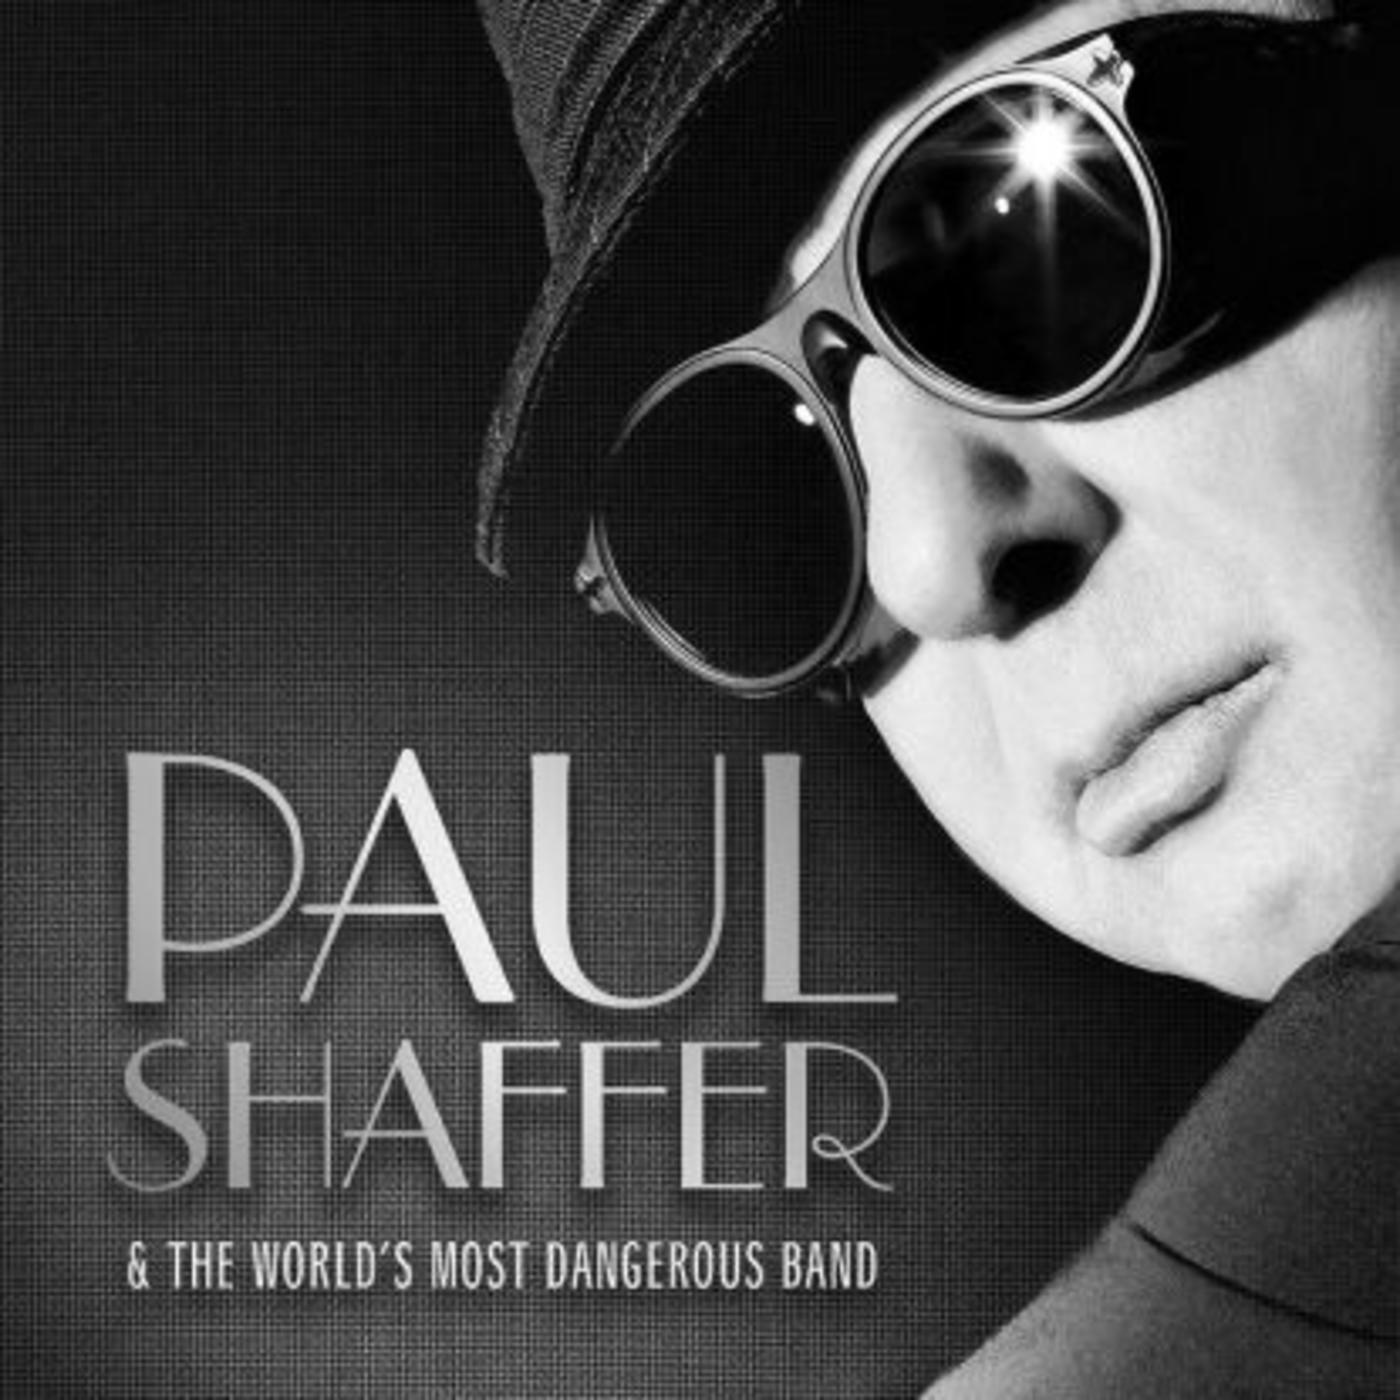 PAUL SHAFFER & THE WORLD’S MOST DANGEROUS BAND